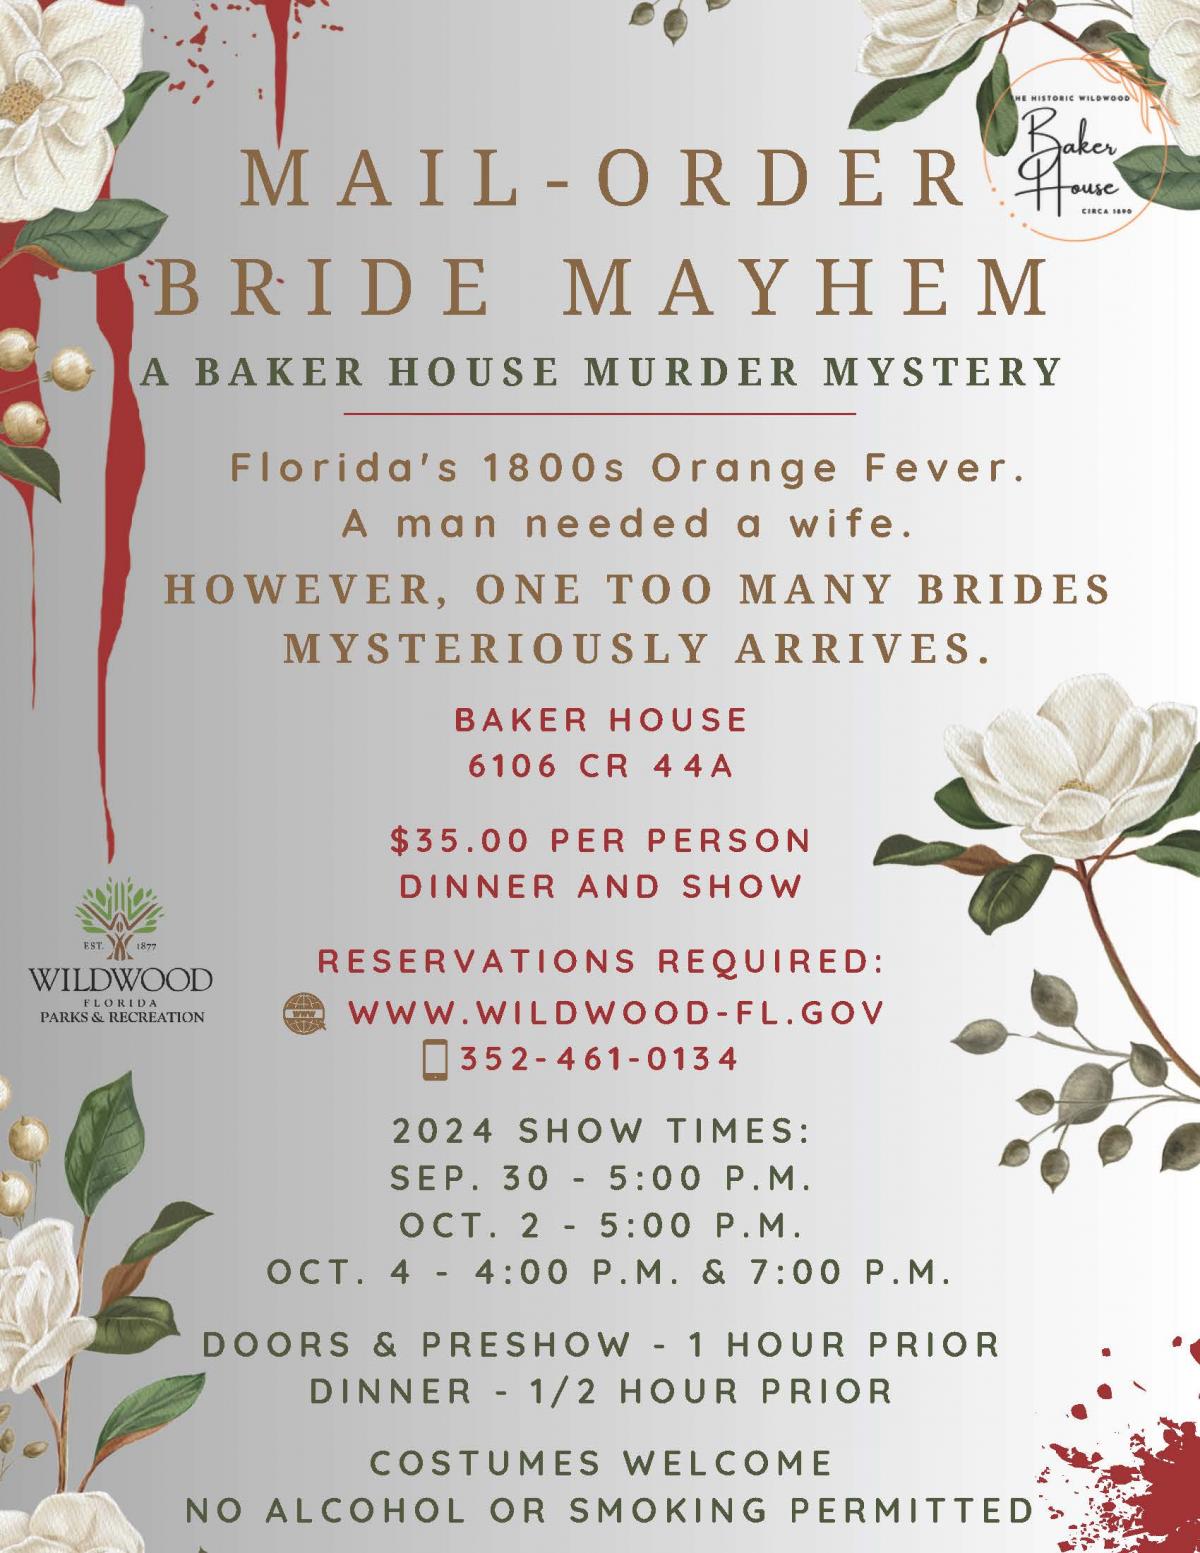 Murder Mystery Mail Order Bride Mayhem, Baker House, 6106 CR 44A, Wildwood Fl 3478,  September 30, October  